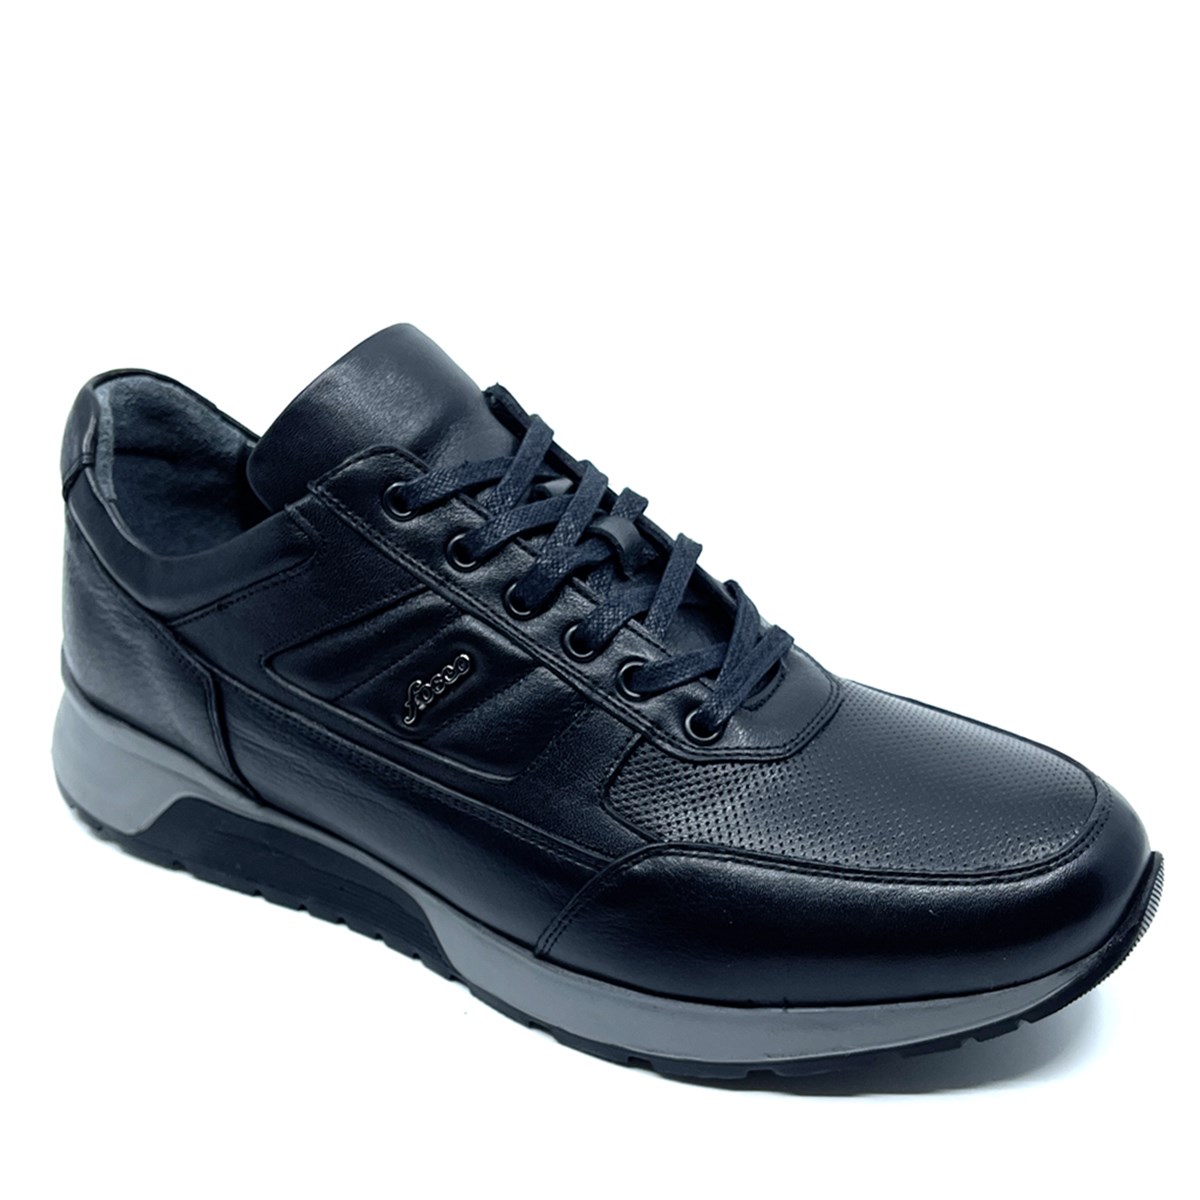 Erkek Sneakers Ayakkabı Hakiki Deri, Renk: Siyah, Beden: 40